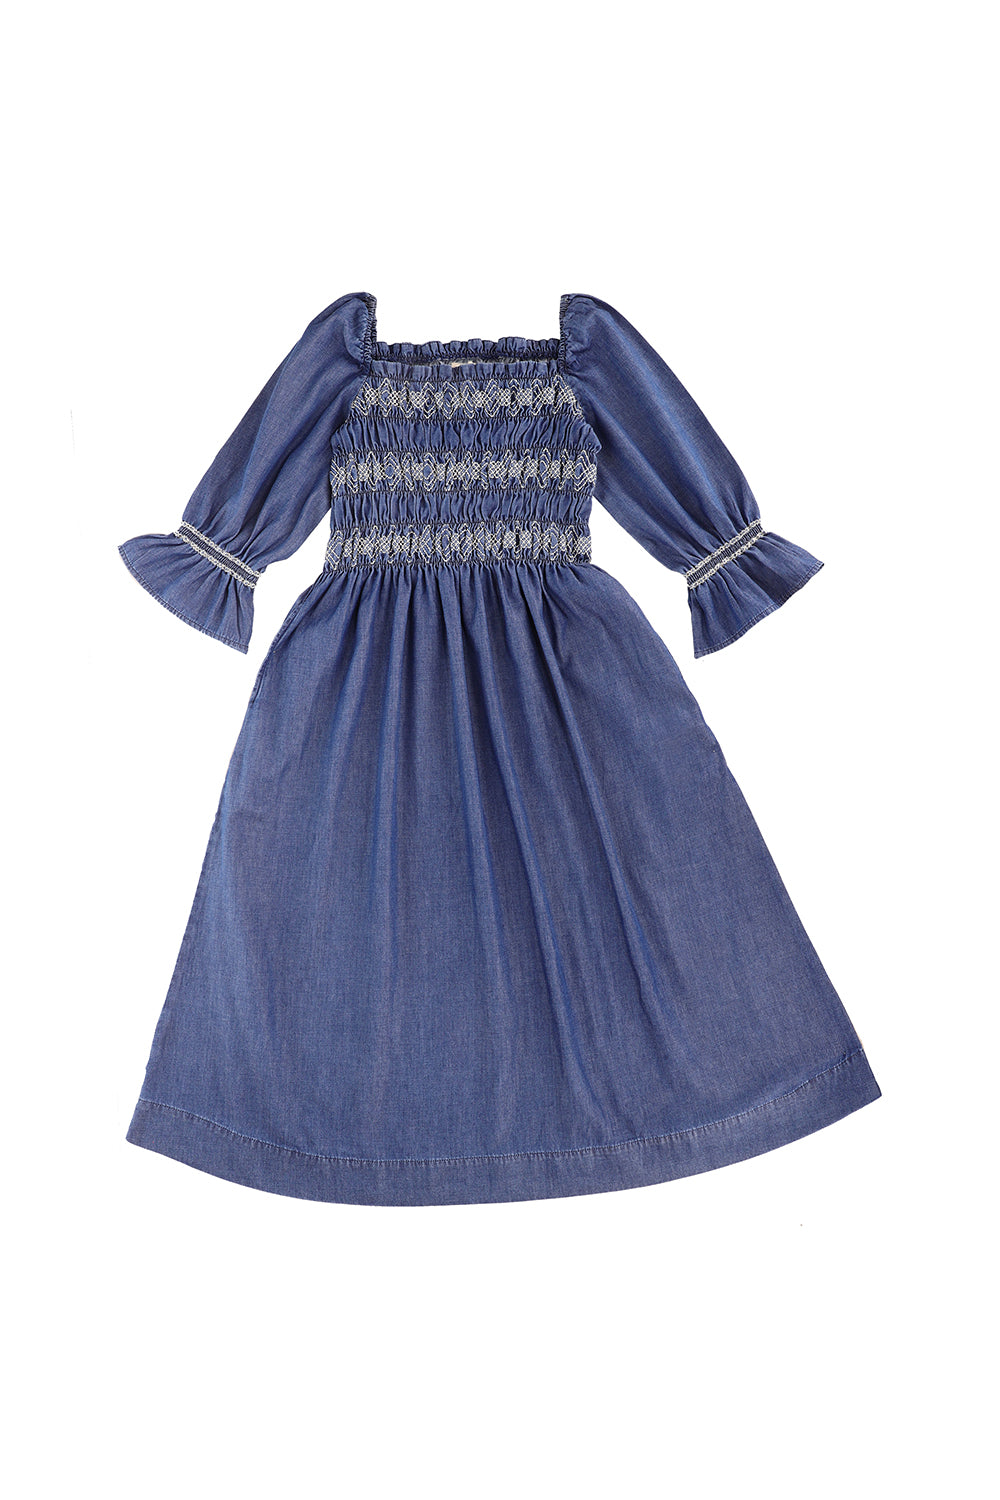 3/4 Sleeve Square Neck Sally Dress in Idaho Vintage - seventy + mochi